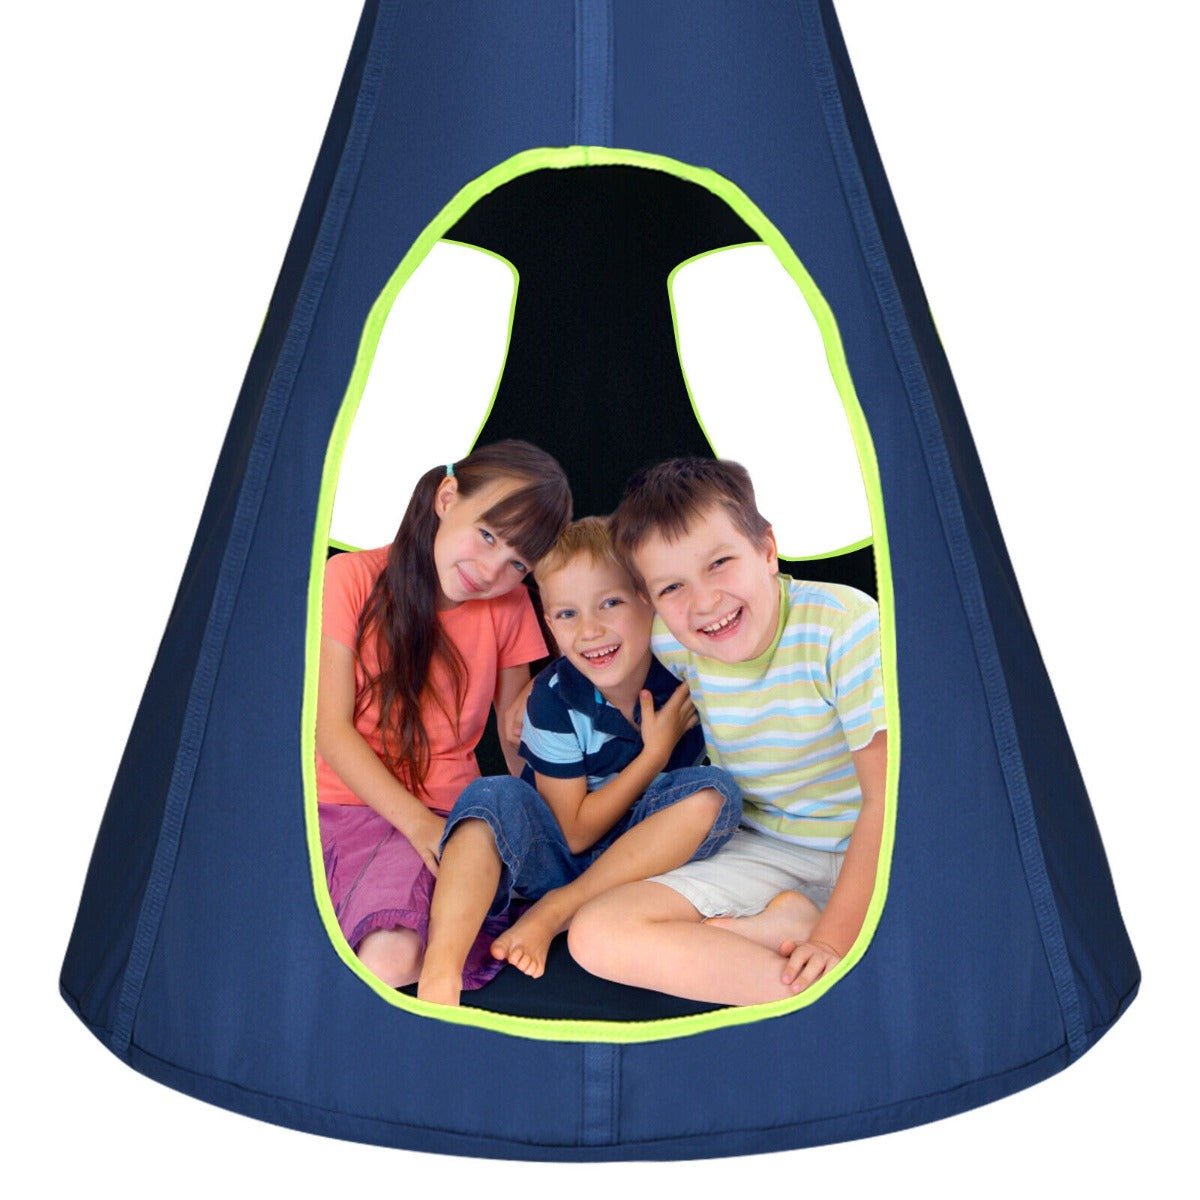 Blissful Bouncing: Kids Nest Swing Tent Blue 80cm for Joyful Play